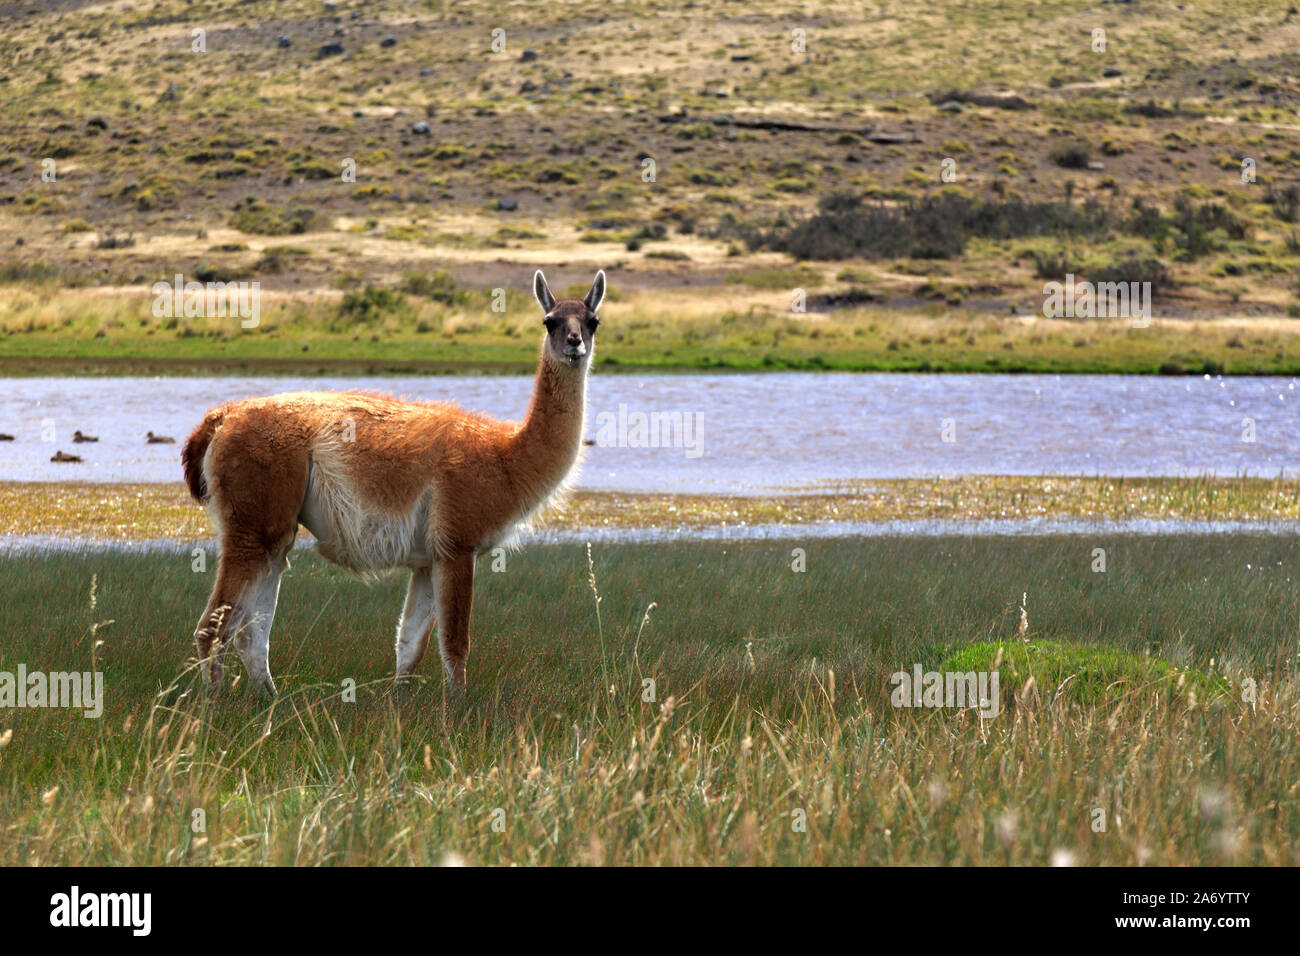 Chile, Patagonia, Torres del Paine National Park (UNESCO Site), Guanaco Stock Photo